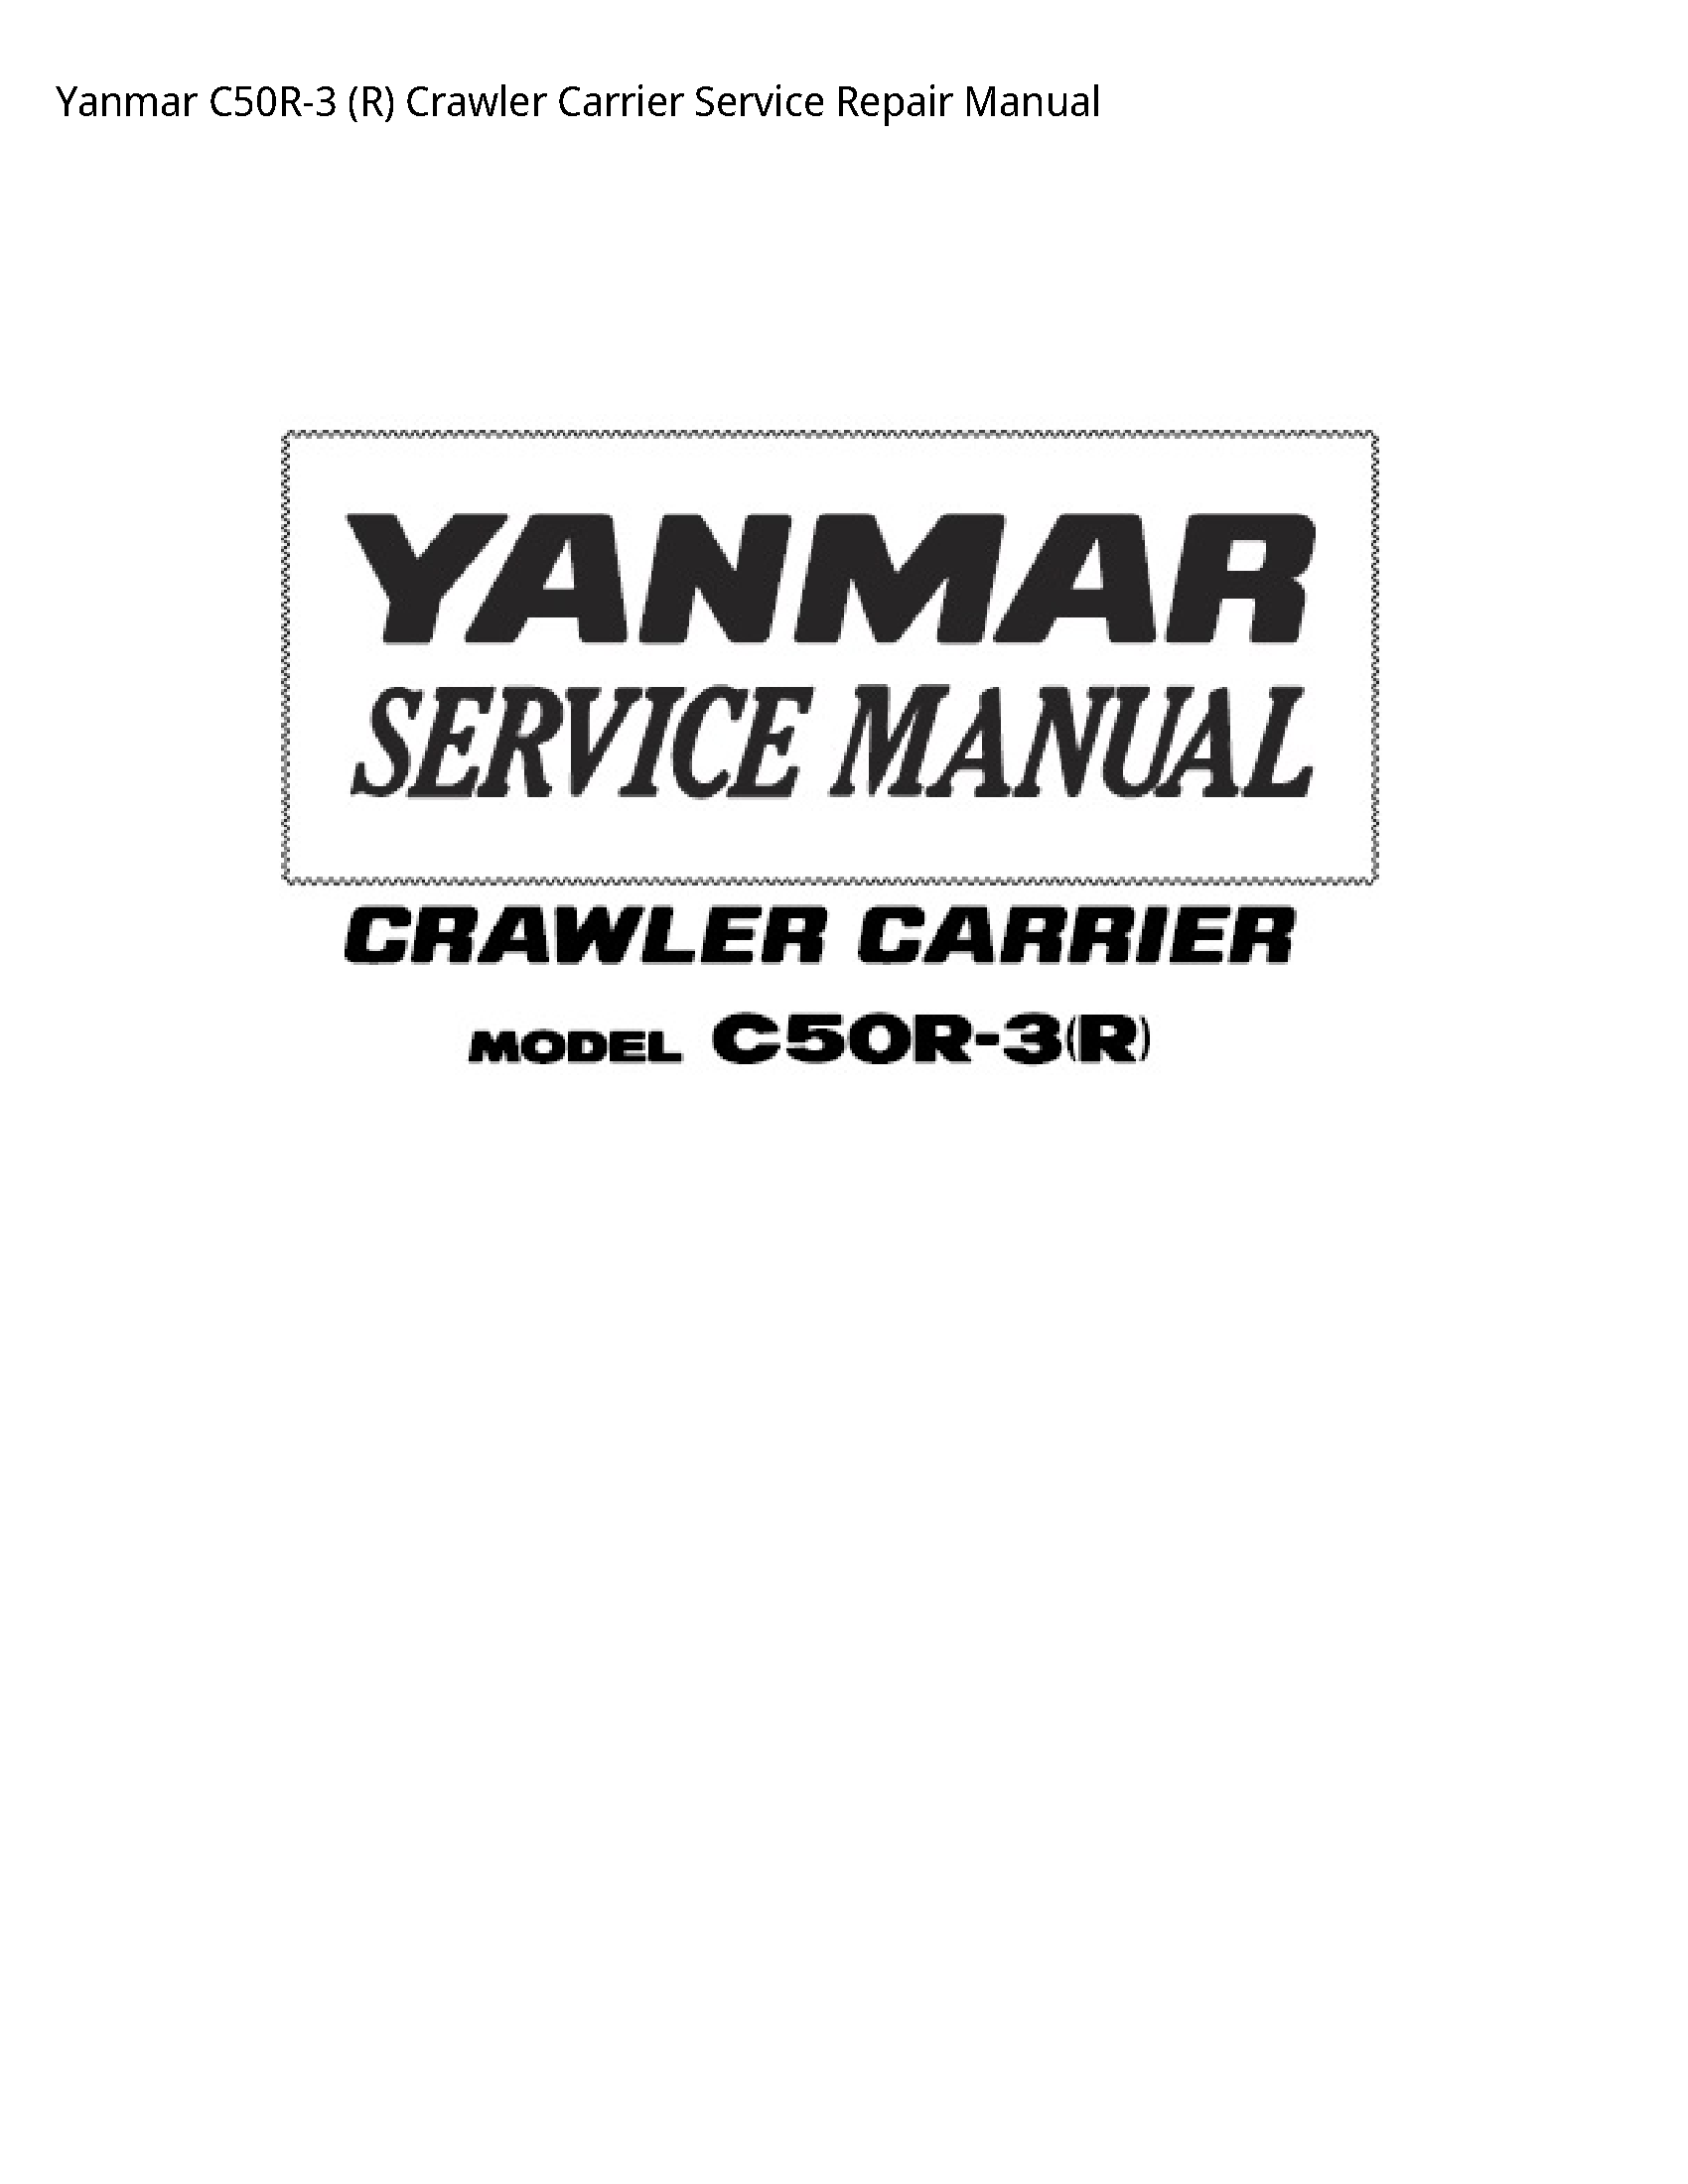 Yanmar C50R-3 (R) Crawler Carrier manual